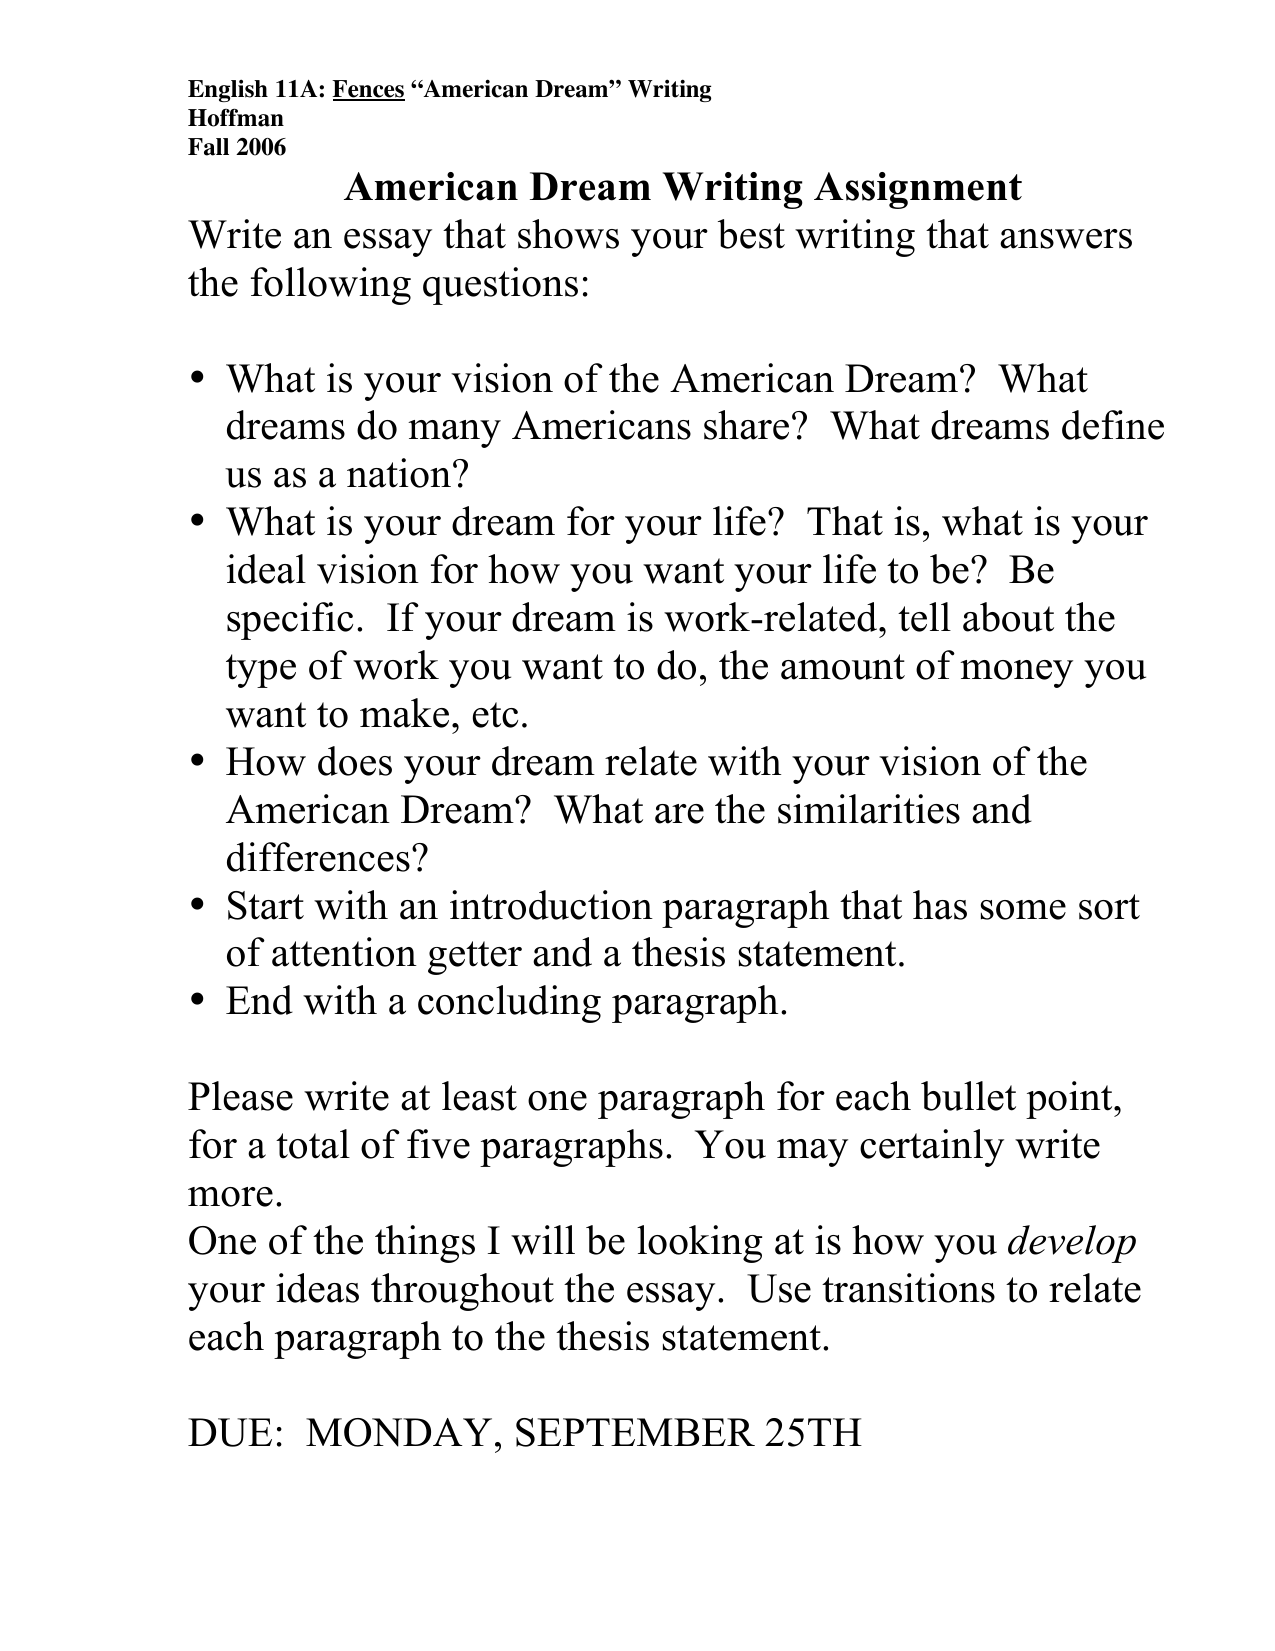 The american dream essays